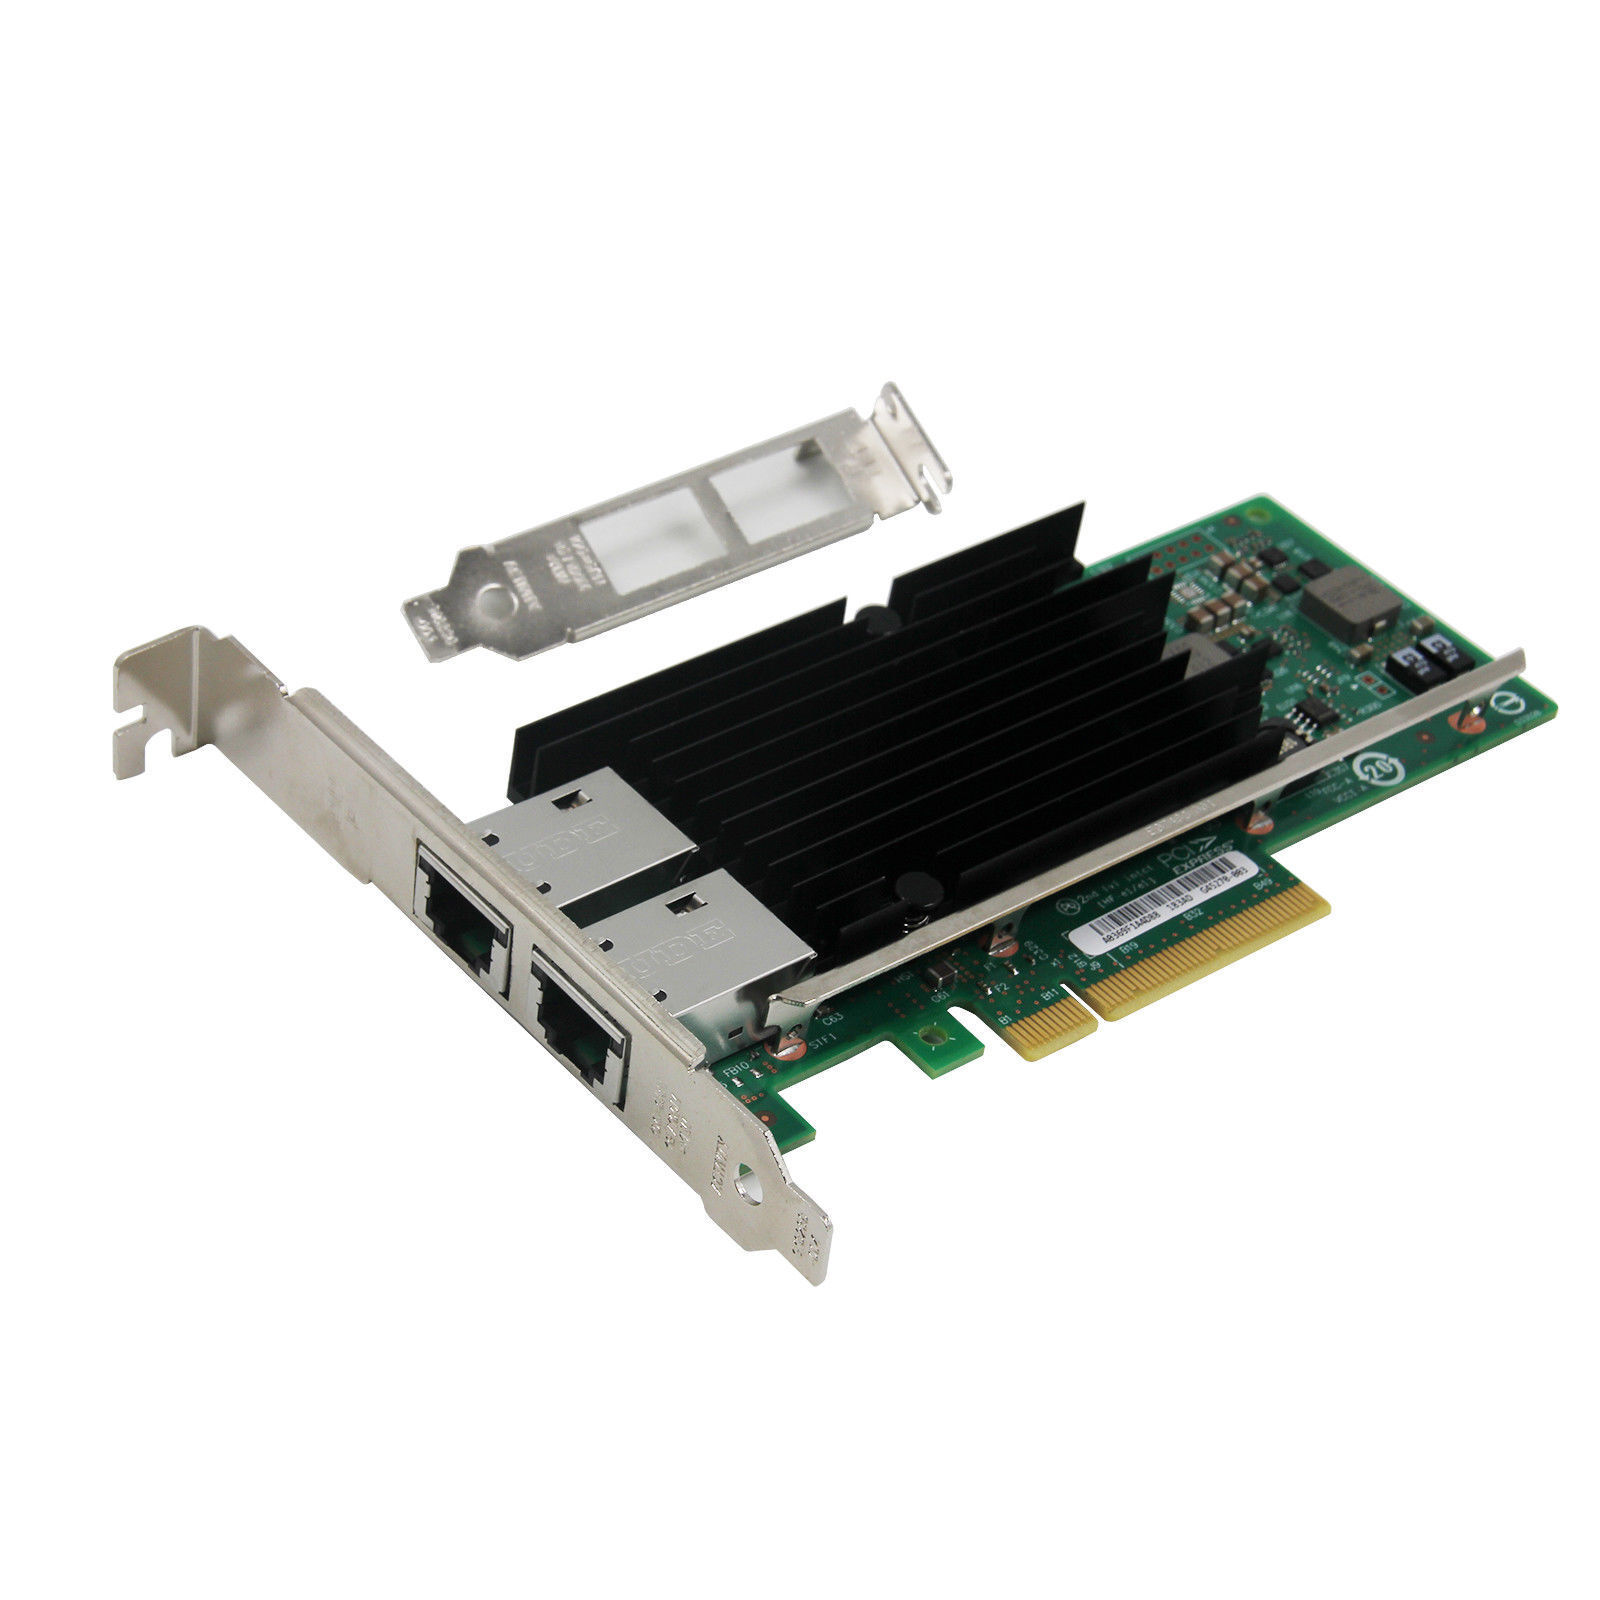 Intel OEM X540-T2 10G PCI-Express Dual RJ45 Ports Ethernet Network Adapter